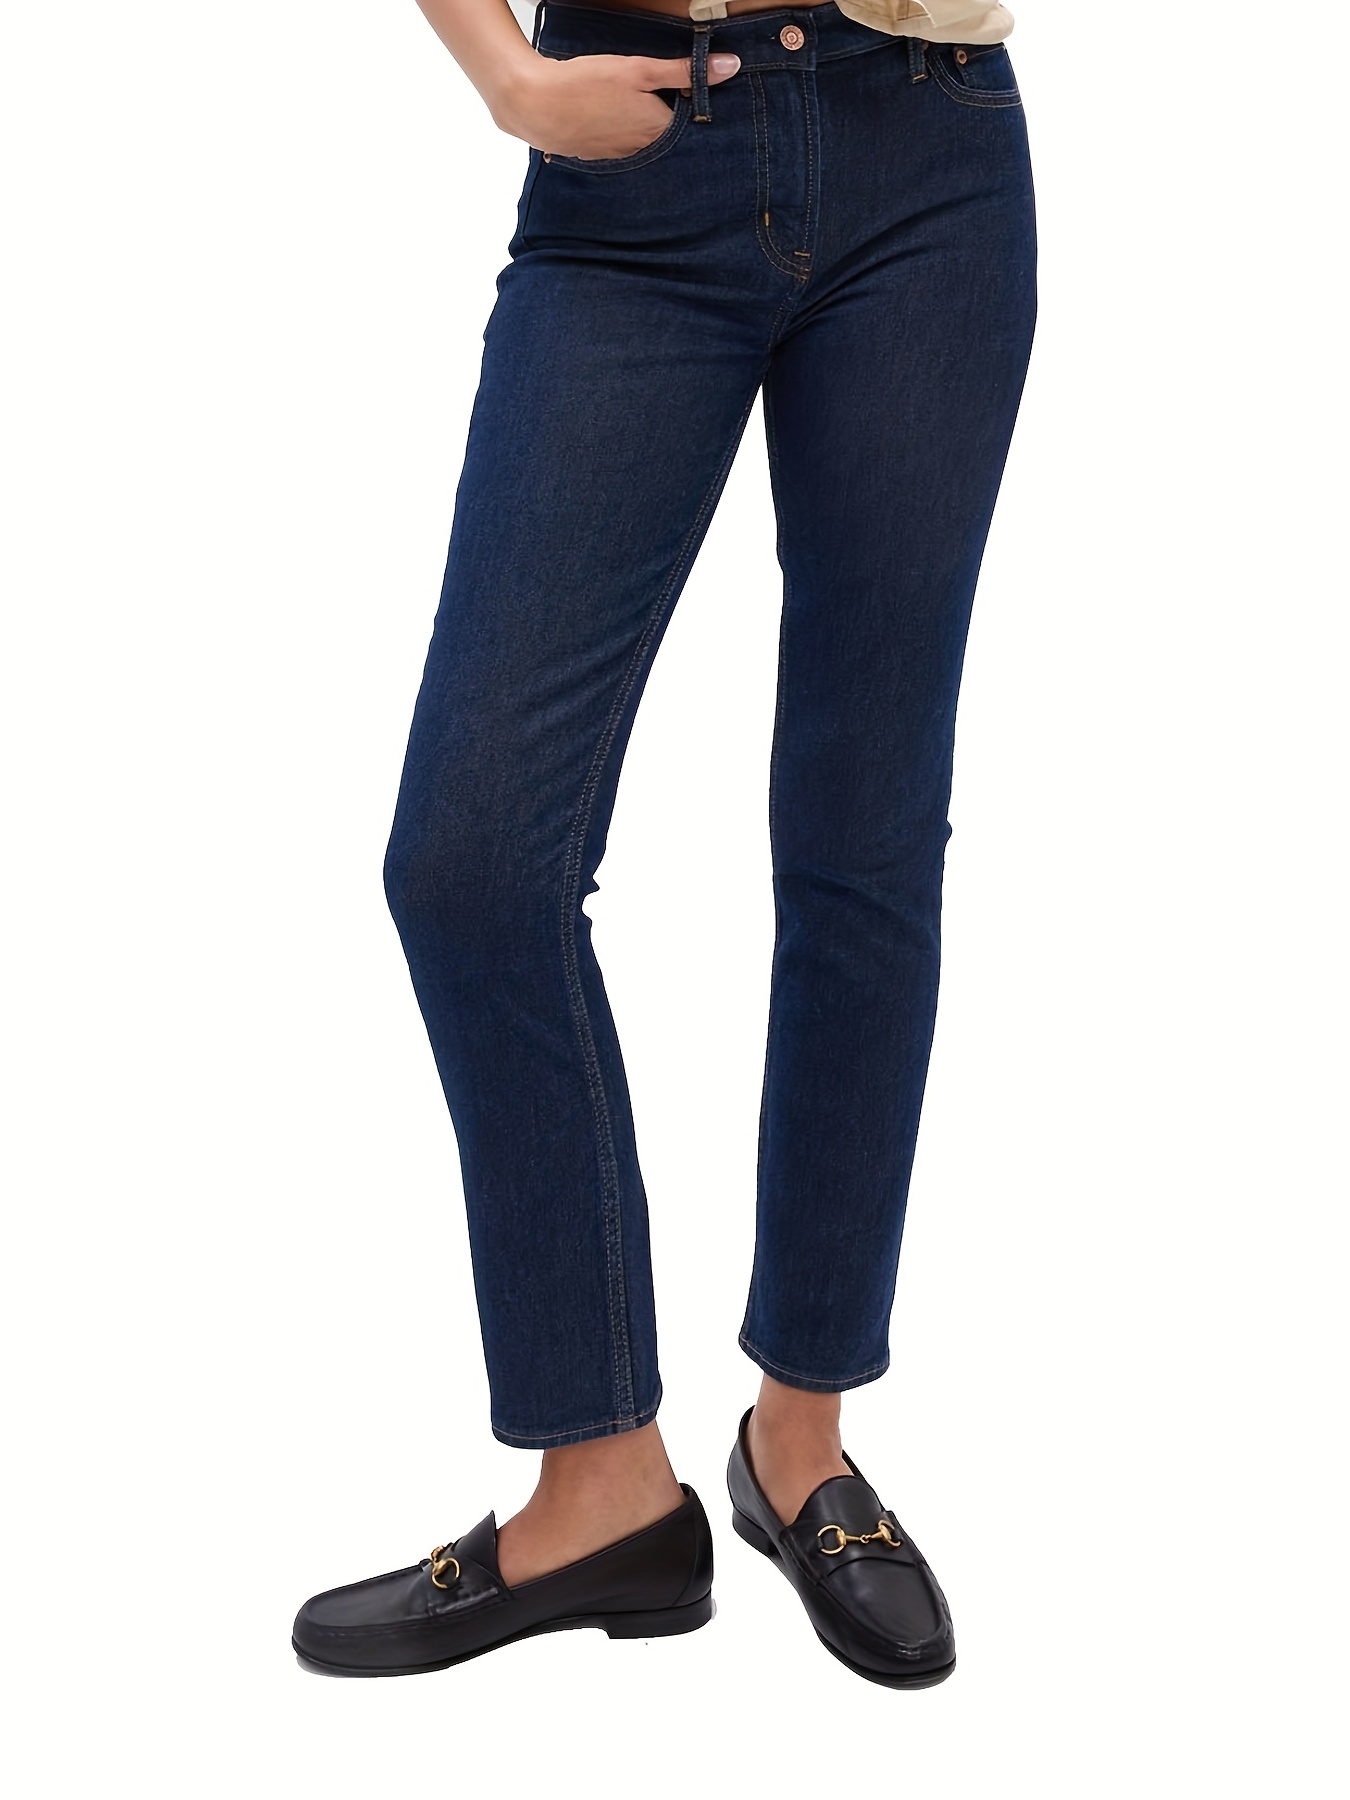 Blue Slant Pockets Skinny Jeans, Slim Fit Slight Stretch Casual Denim  Pants, Women's Denim Jeans & Clothing